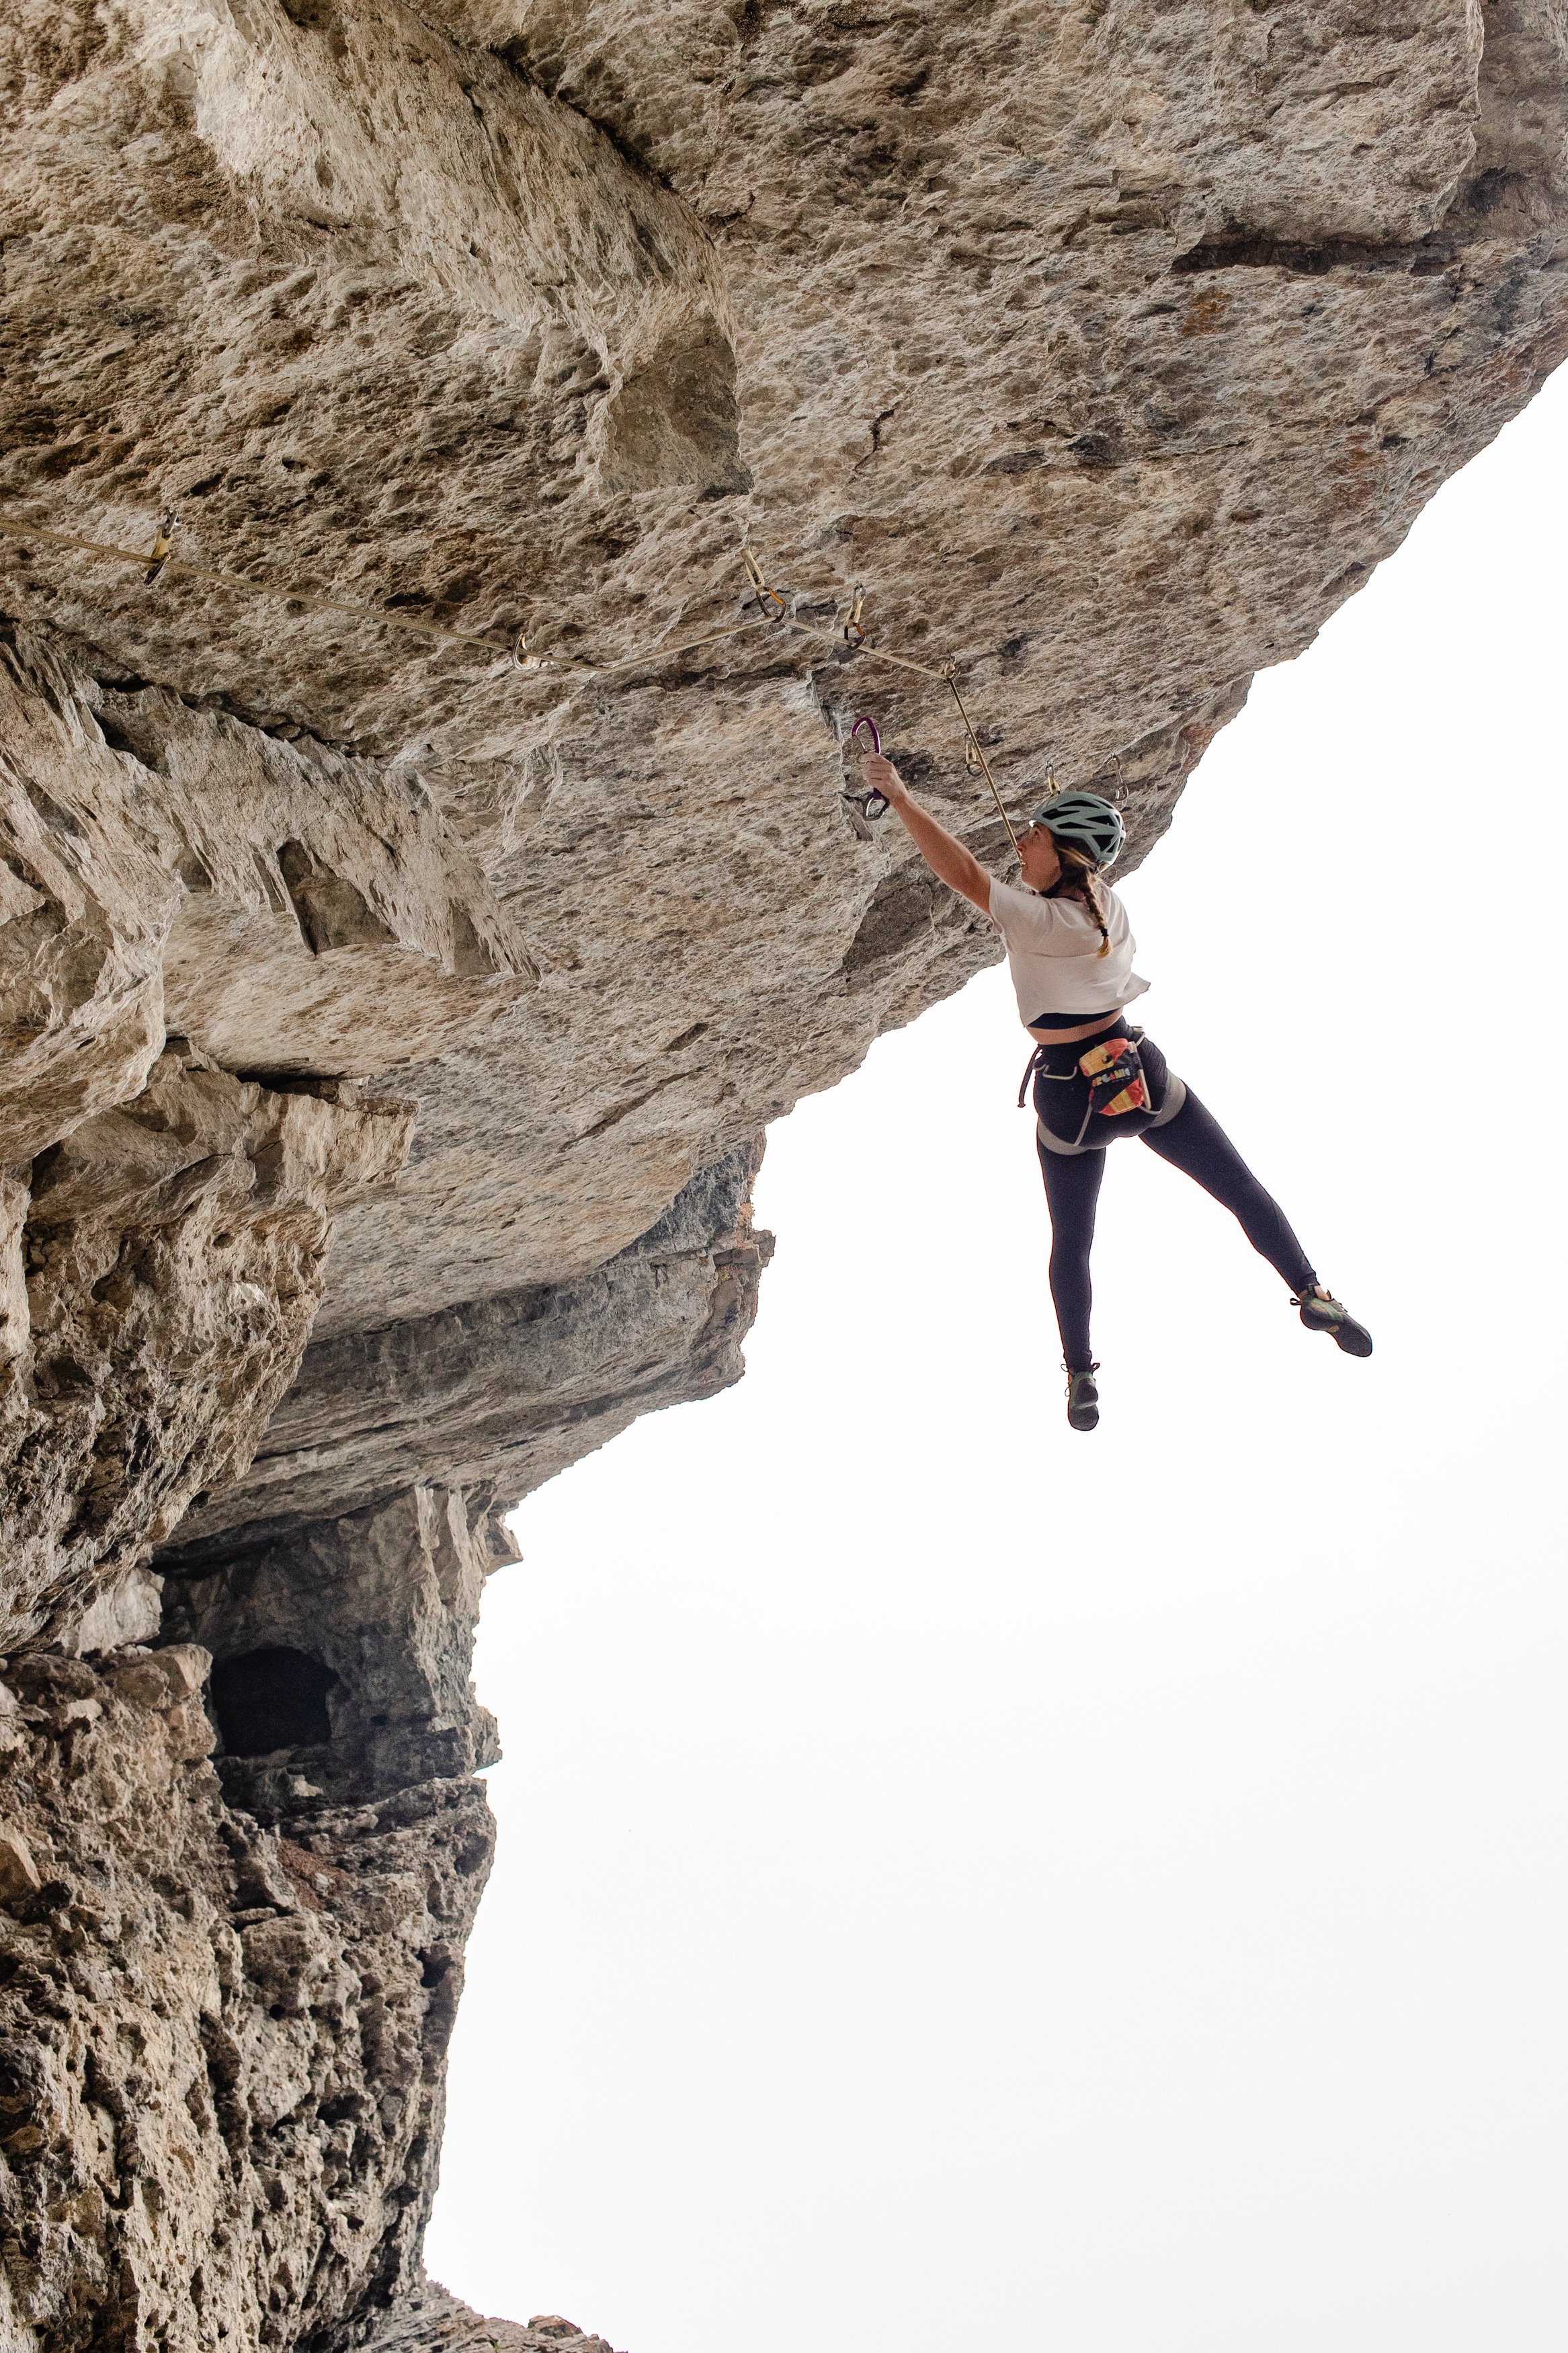 Climbing-Grassi-29.jpg